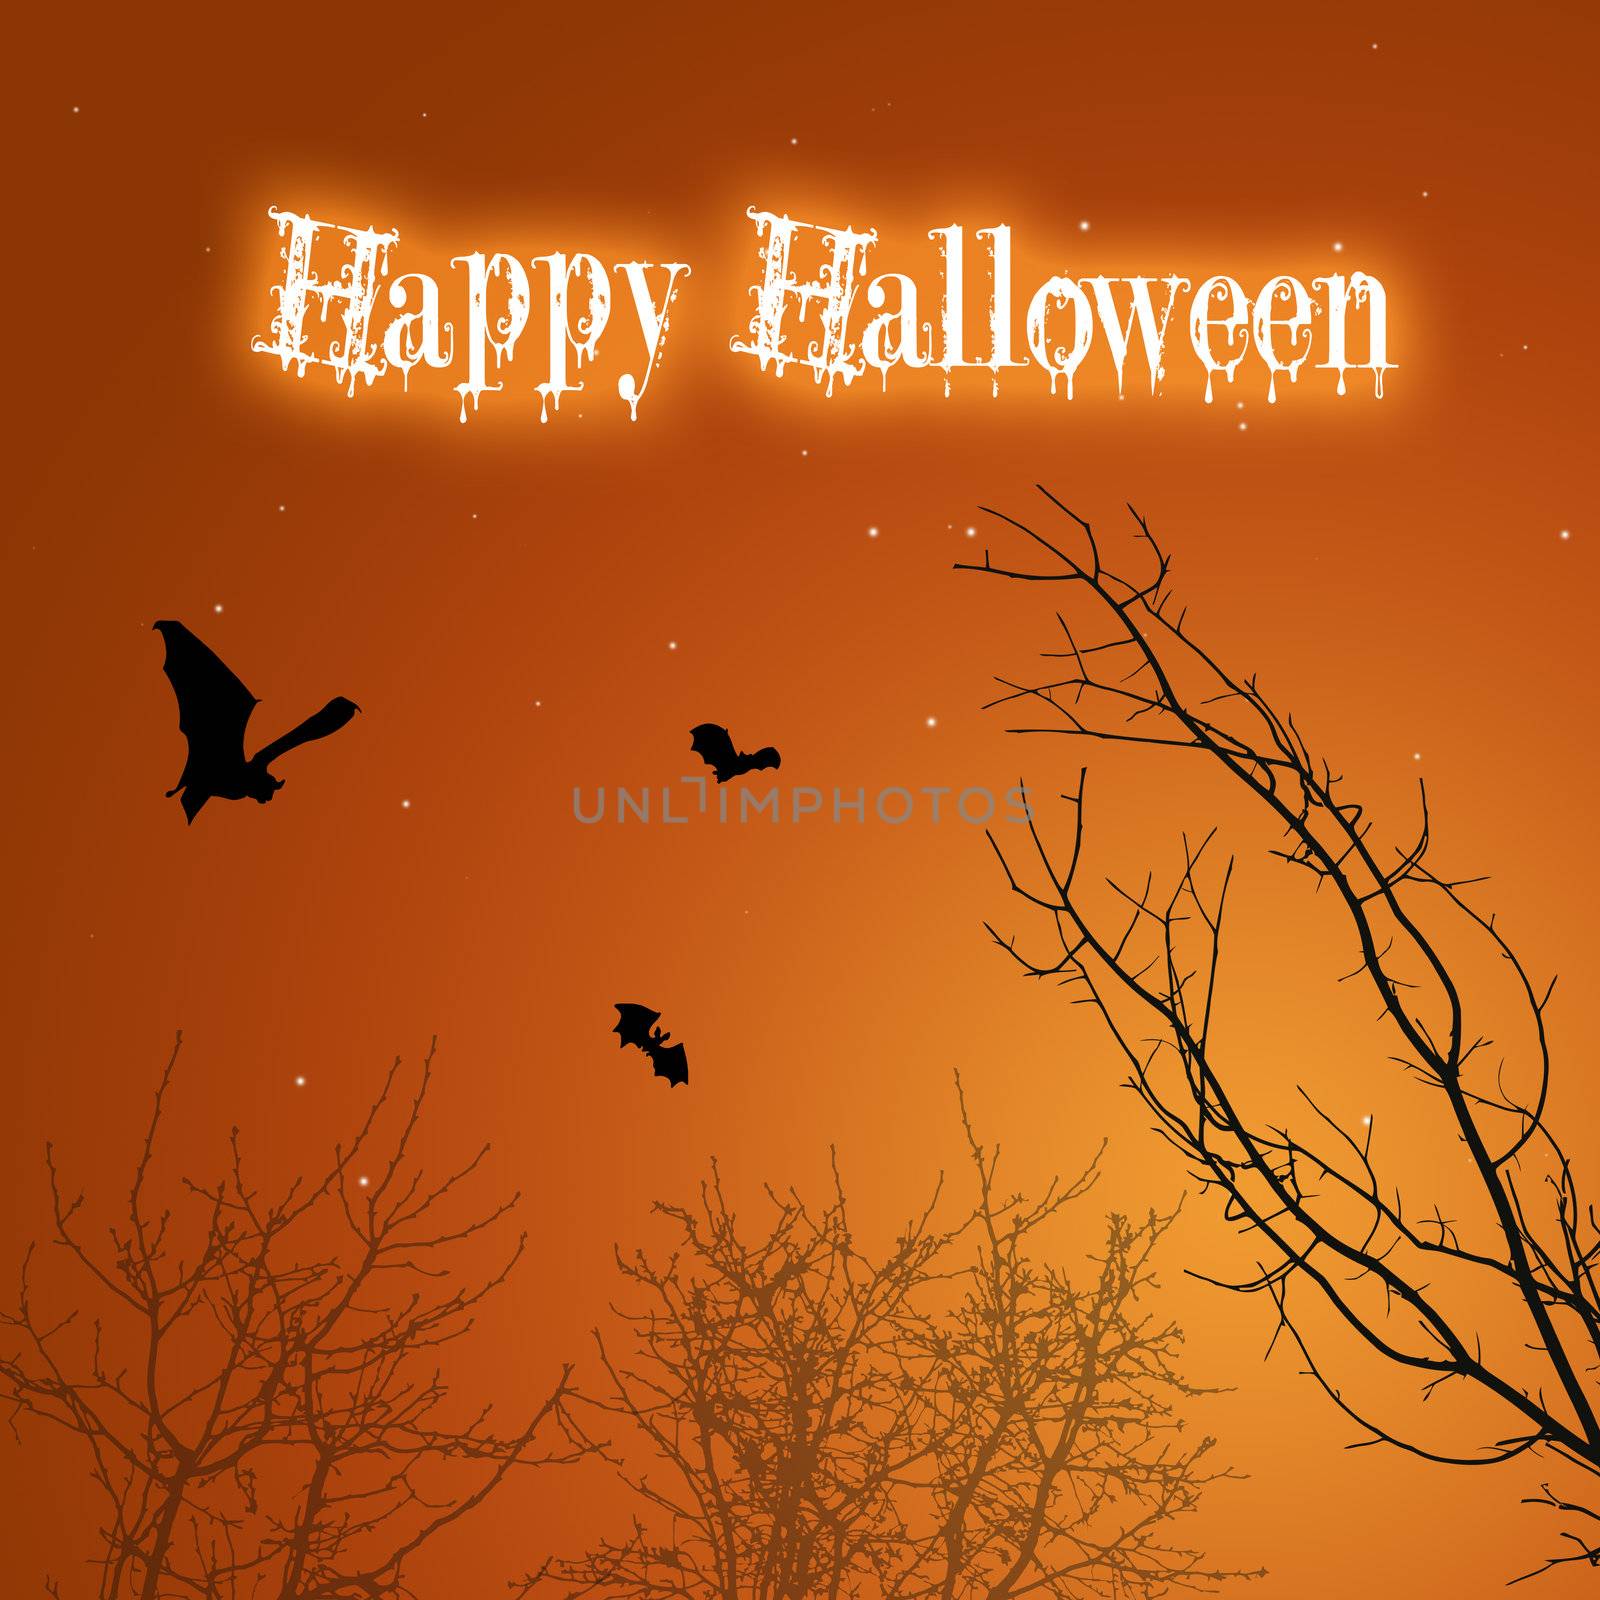 Halloween Bats and Trees by SorayaShan